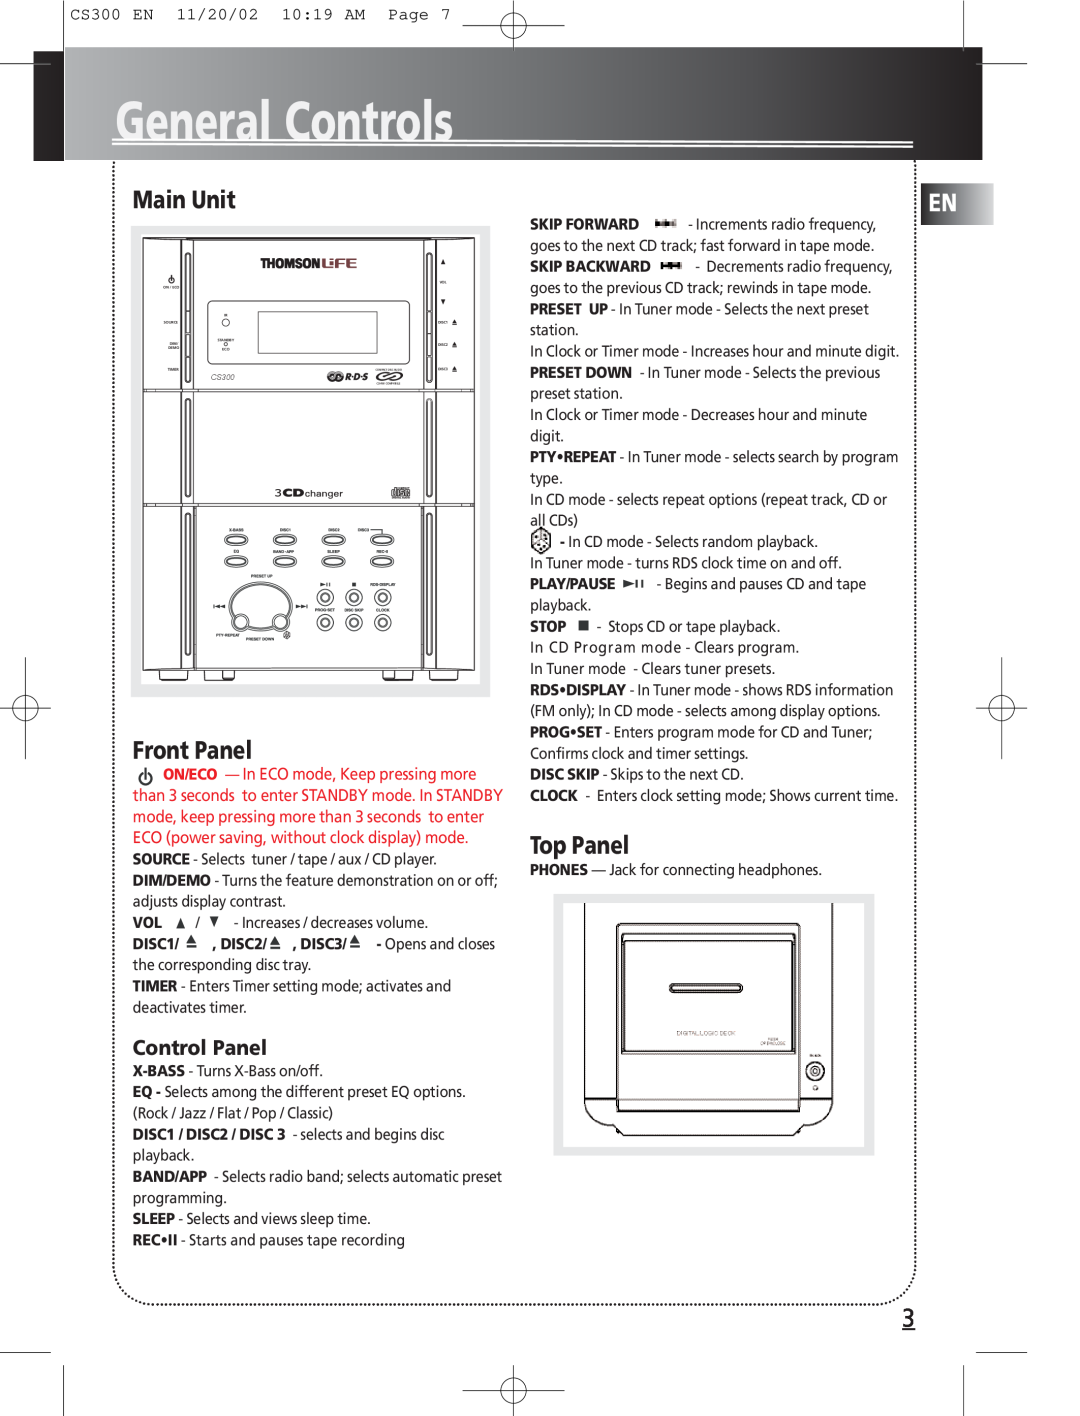 Technicolor - Thomson CS300 manual Main Unit, Front Panel, Top Panel, Control Panel, General Controls, DISC1 